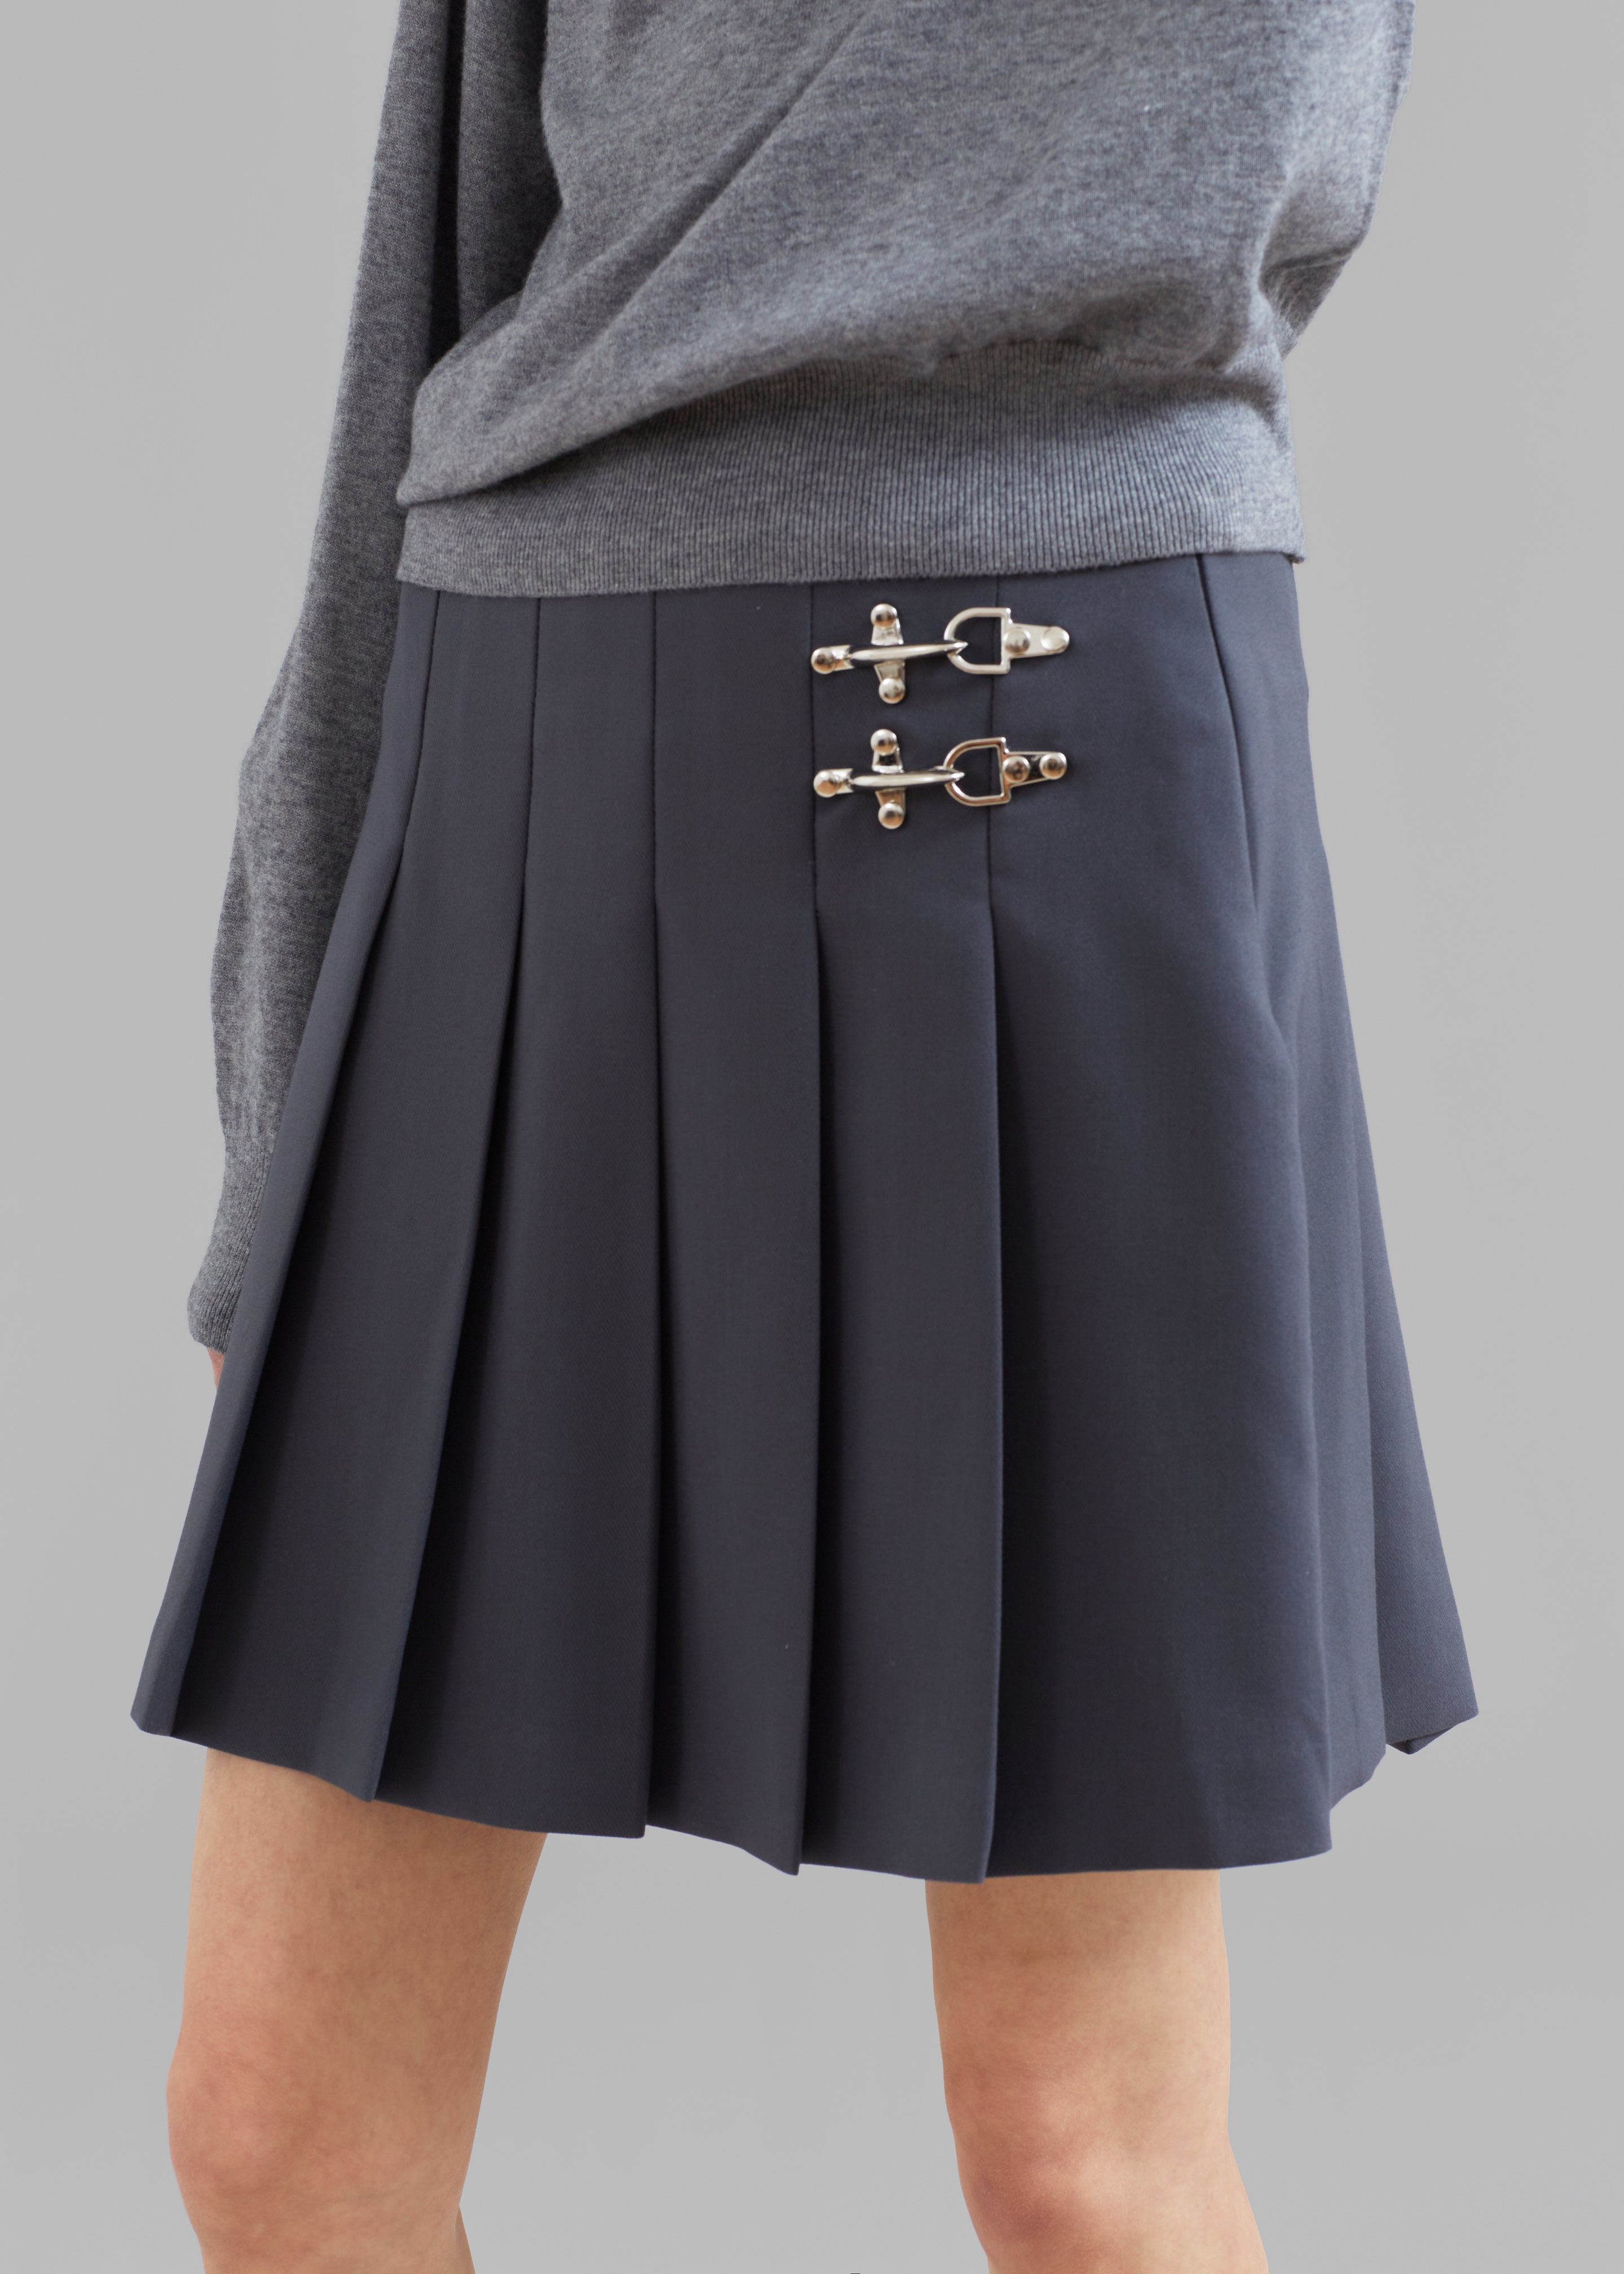 Nyra Pleated Skirt - Charcoal - 2